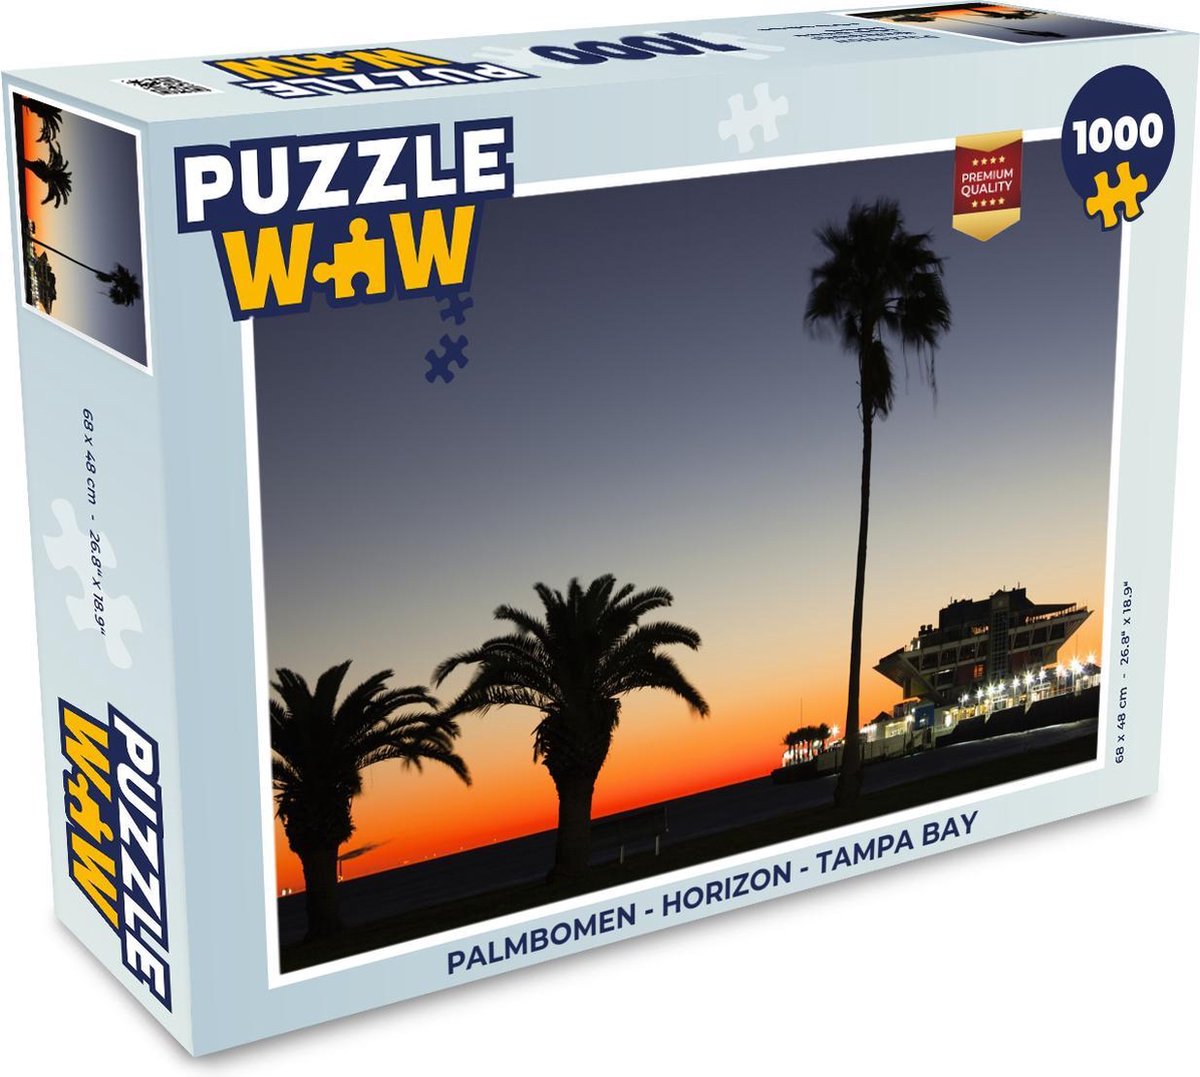 Afbeelding van product PuzzleWow  Puzzel Palmbomen - Horizon - Tampa Bay - Legpuzzel - Puzzel 1000 stukjes volwassenen